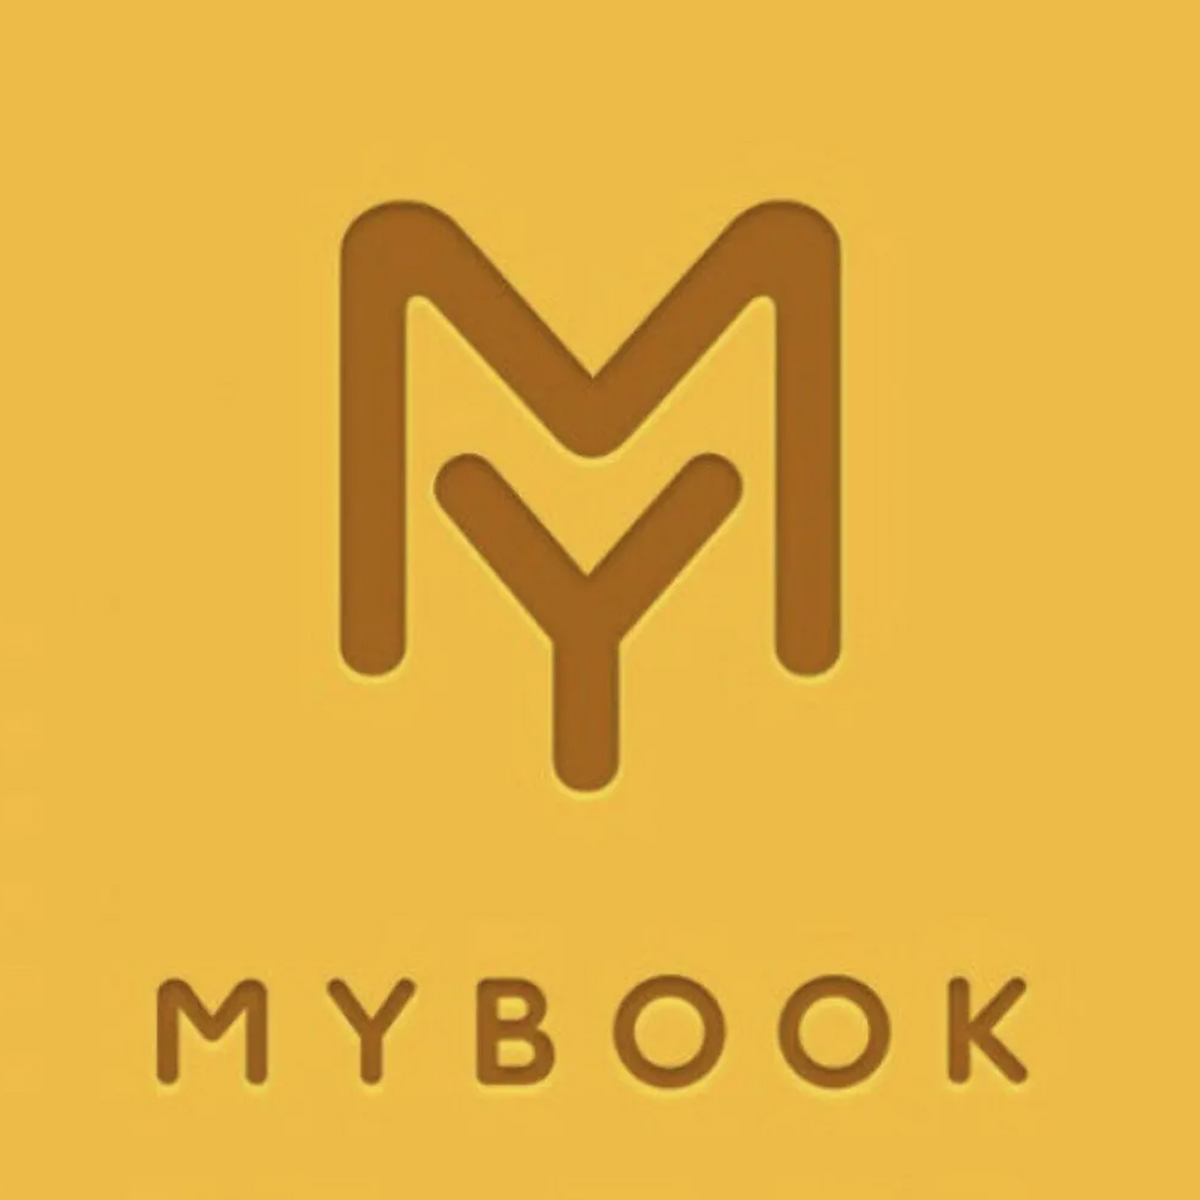 My book people. MYBOOK иконка. My book логотип. MYBOOK подписка. MYBOOK приложение.